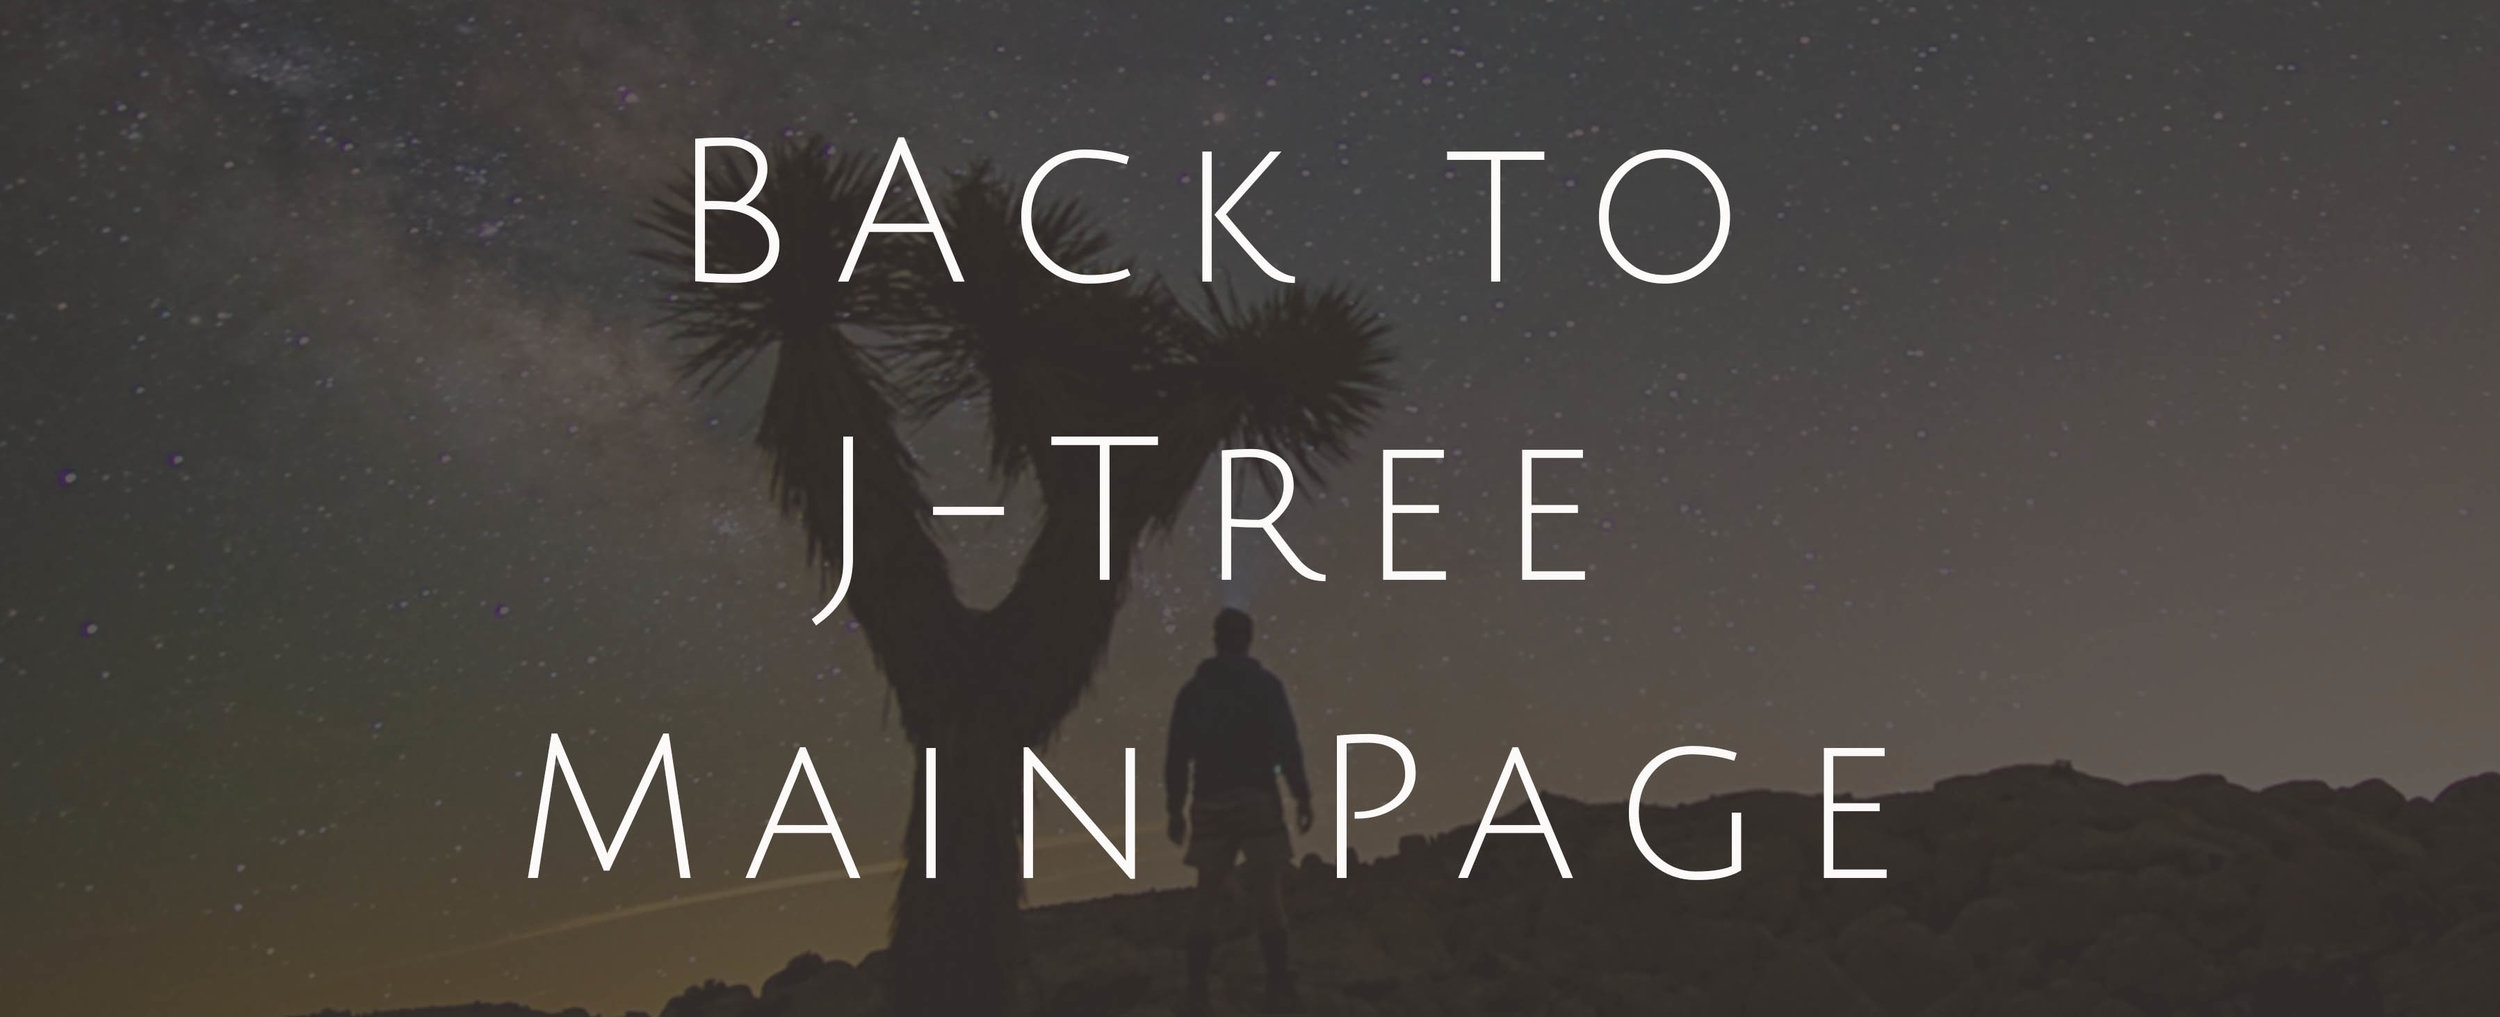 Back to J-tree Main Page 2.jpg